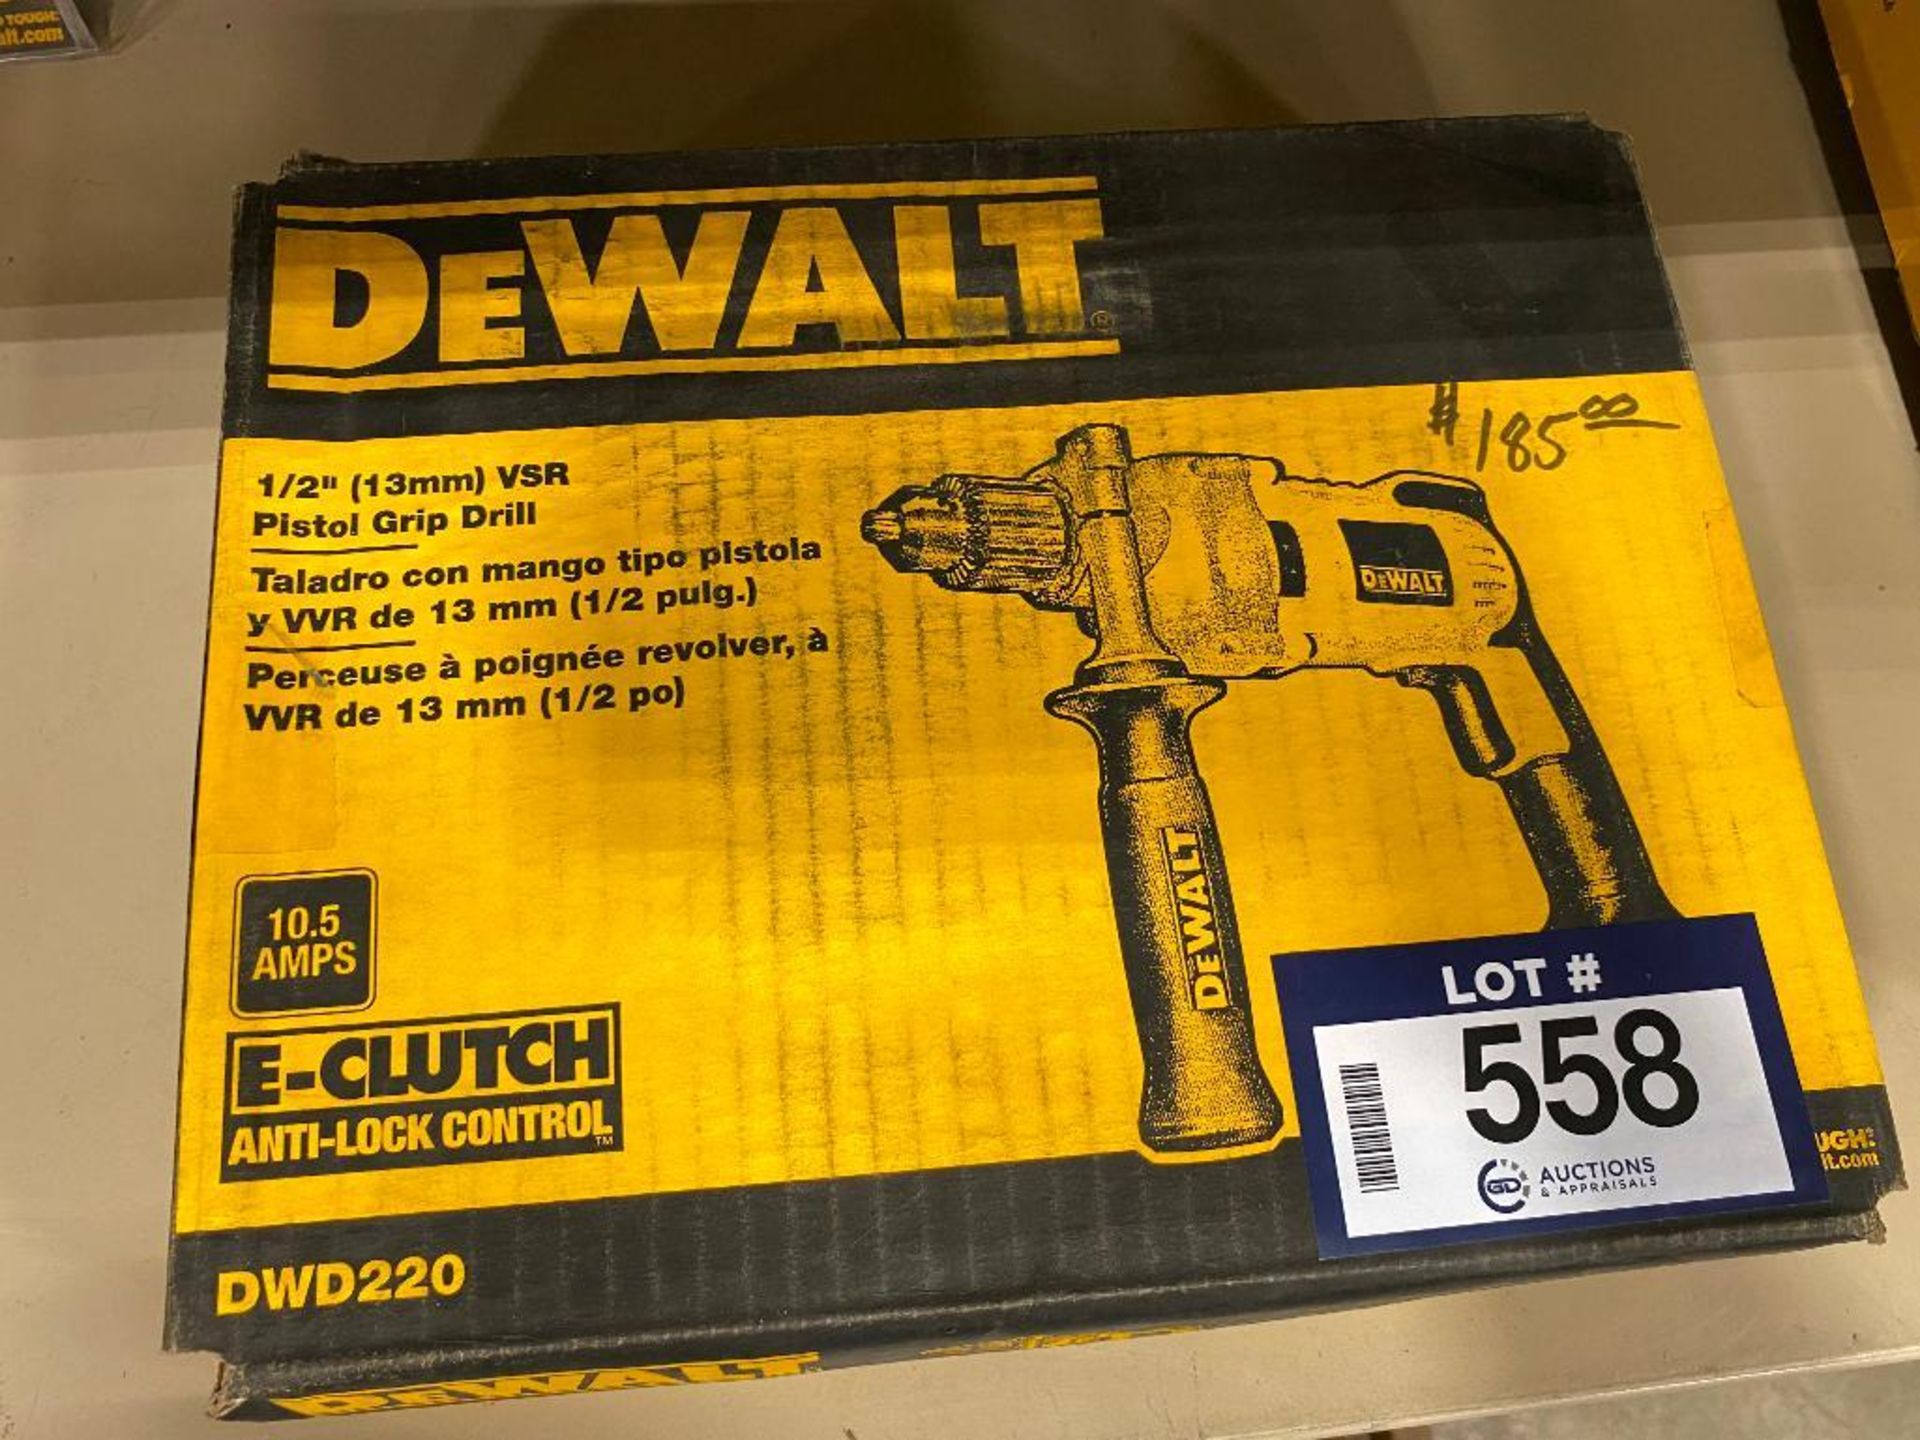 DeWalt DWD220 1/2" VSR Pistol Grip Drill - Image 4 of 4